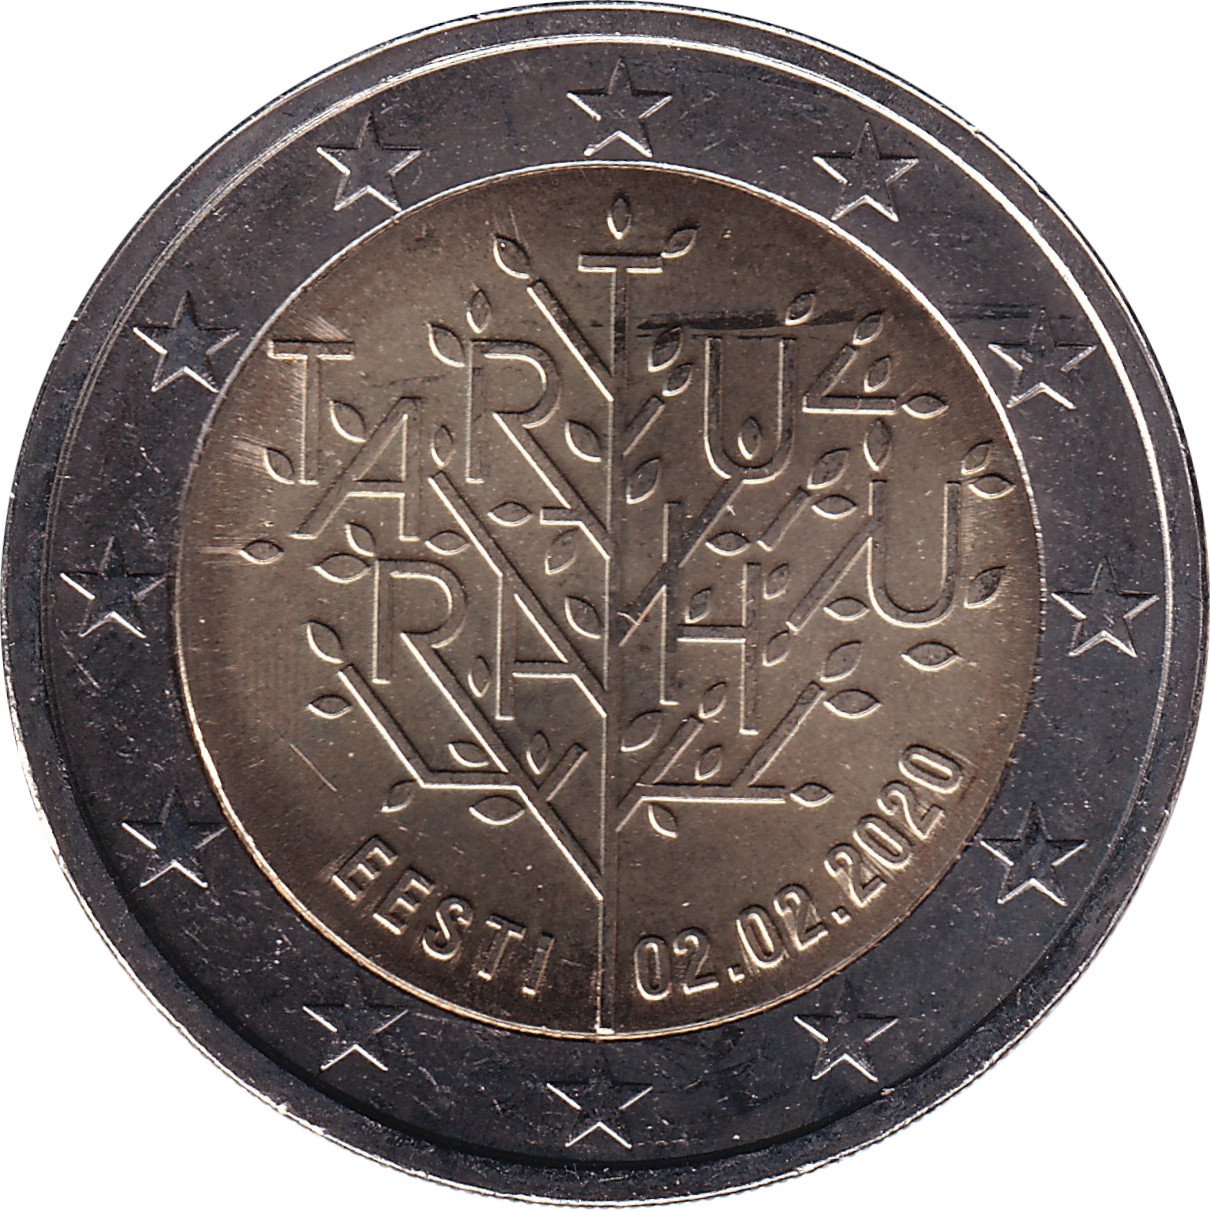 2 euro - Traité de Tartu - 100 years